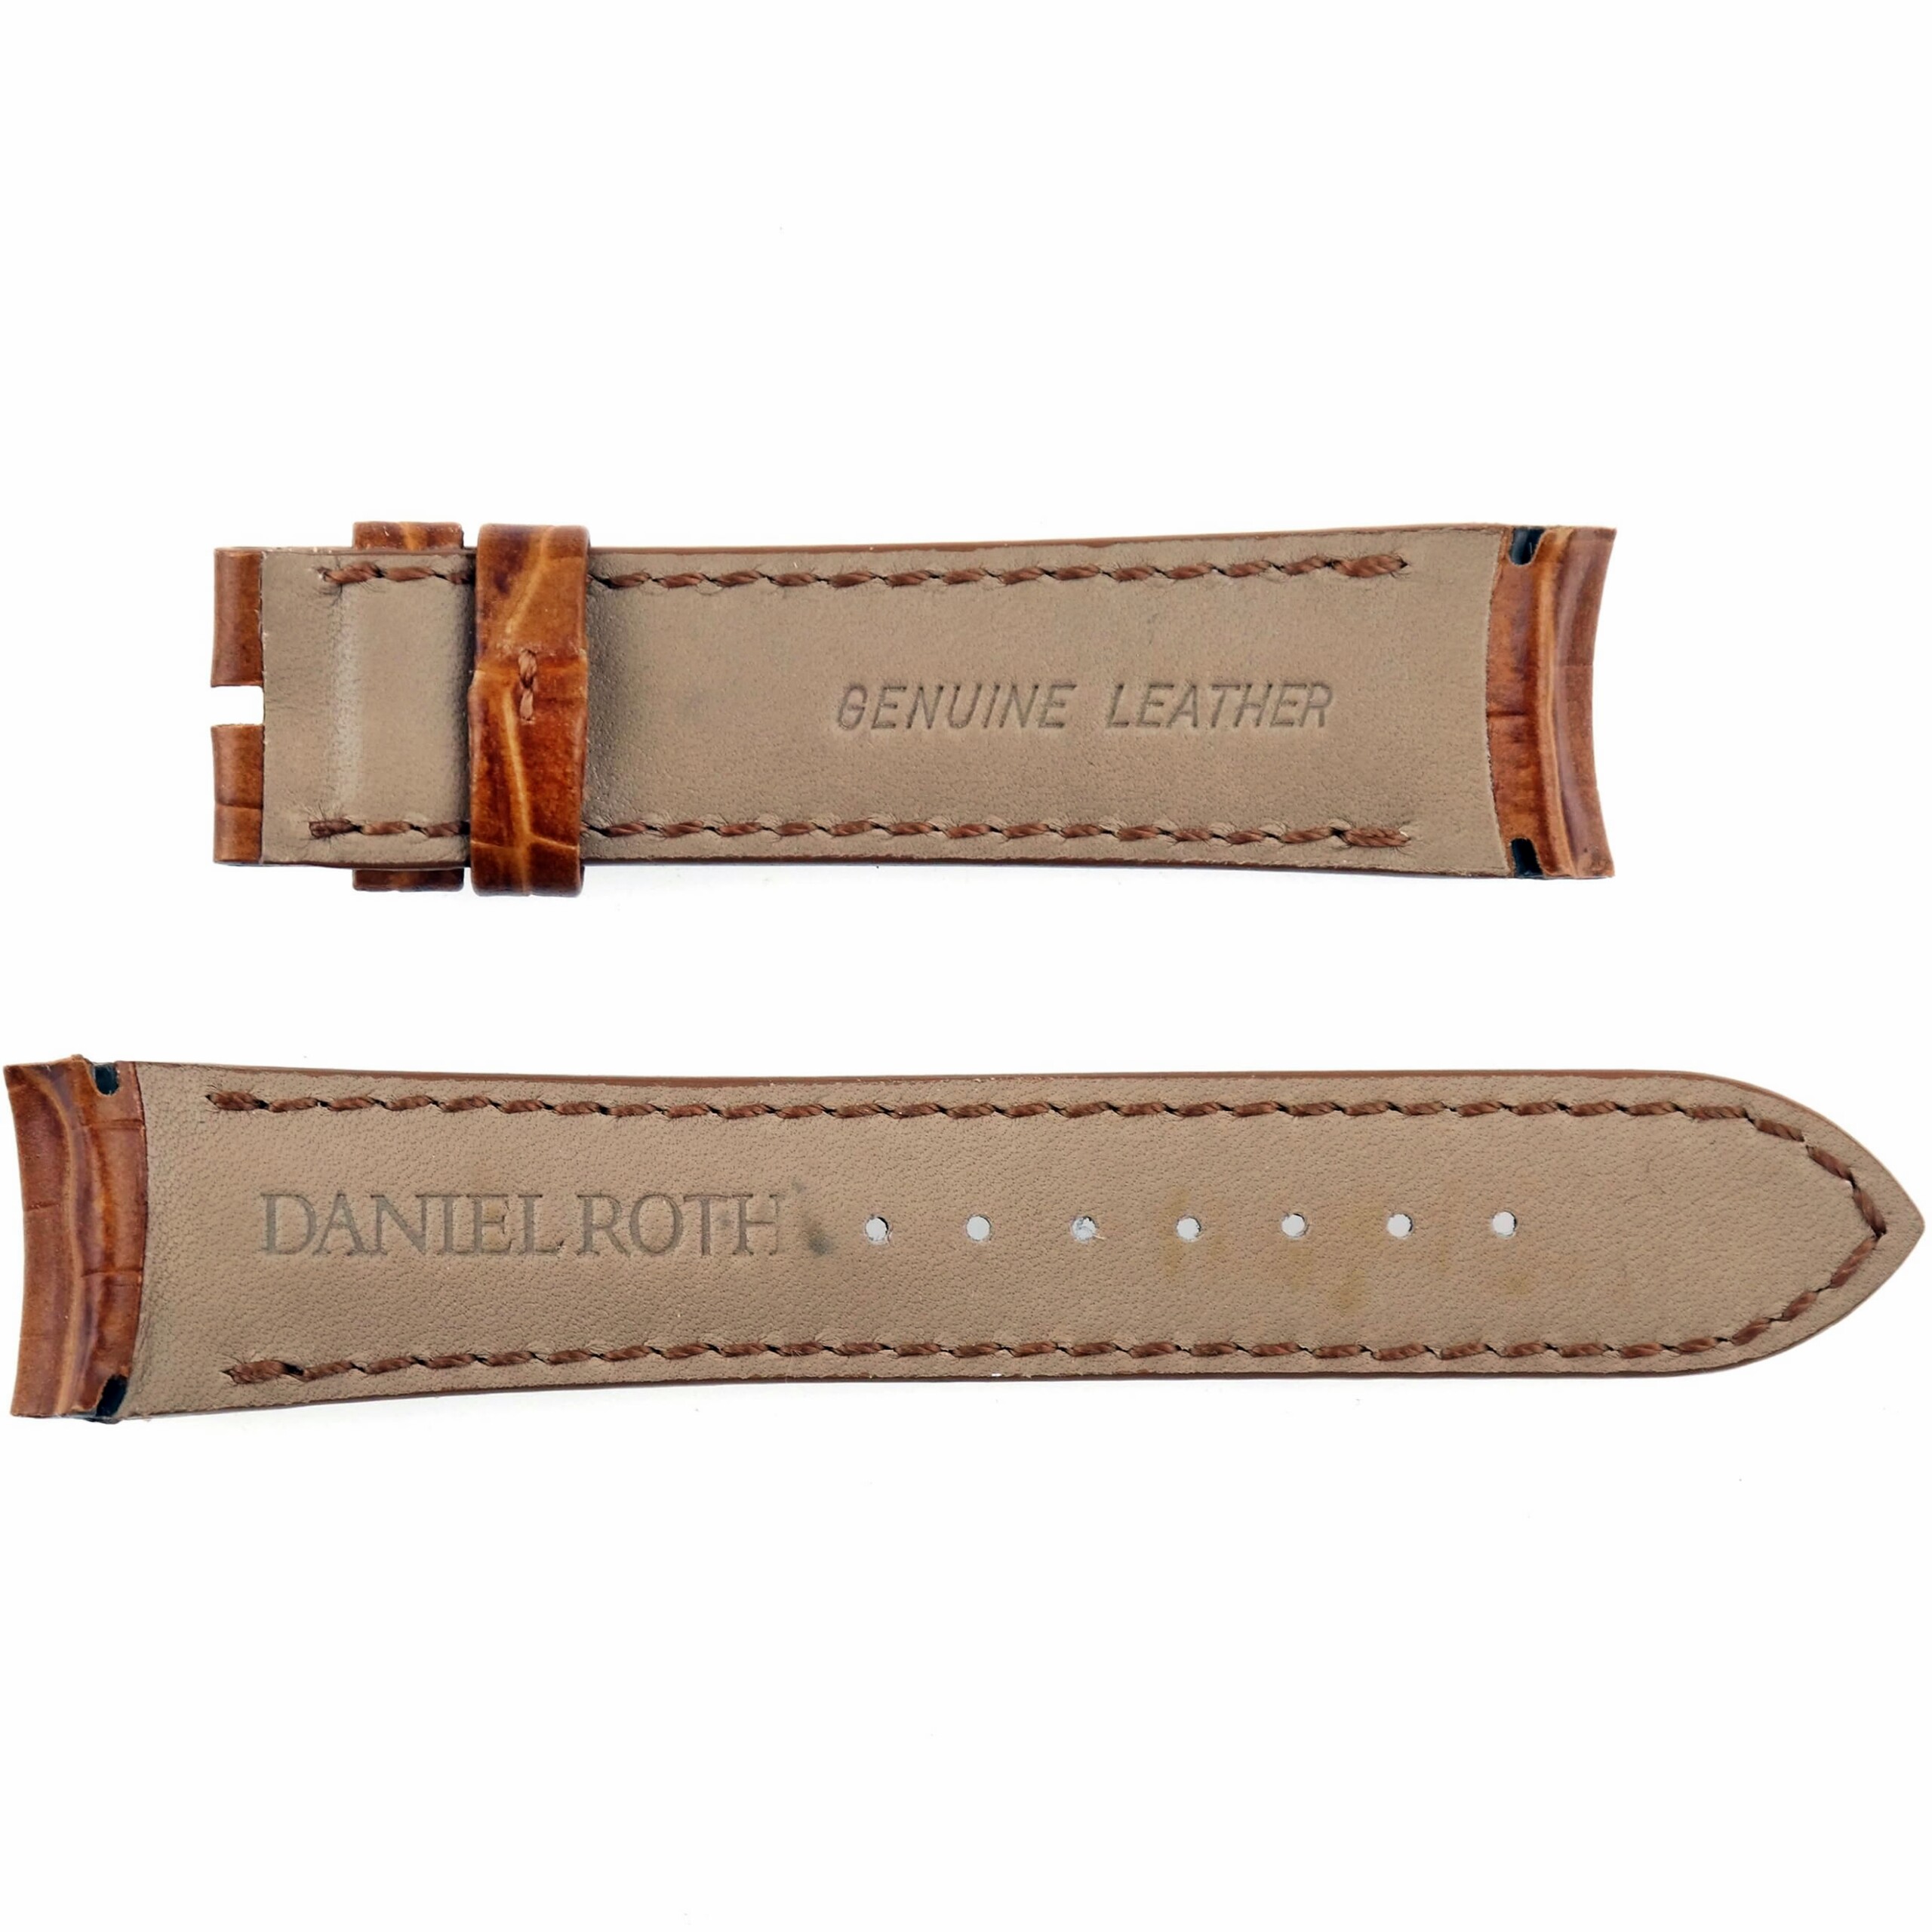 DANIEL ROTH - Luxury Watch Strap - 20 mm - Genuine Leather - Brown